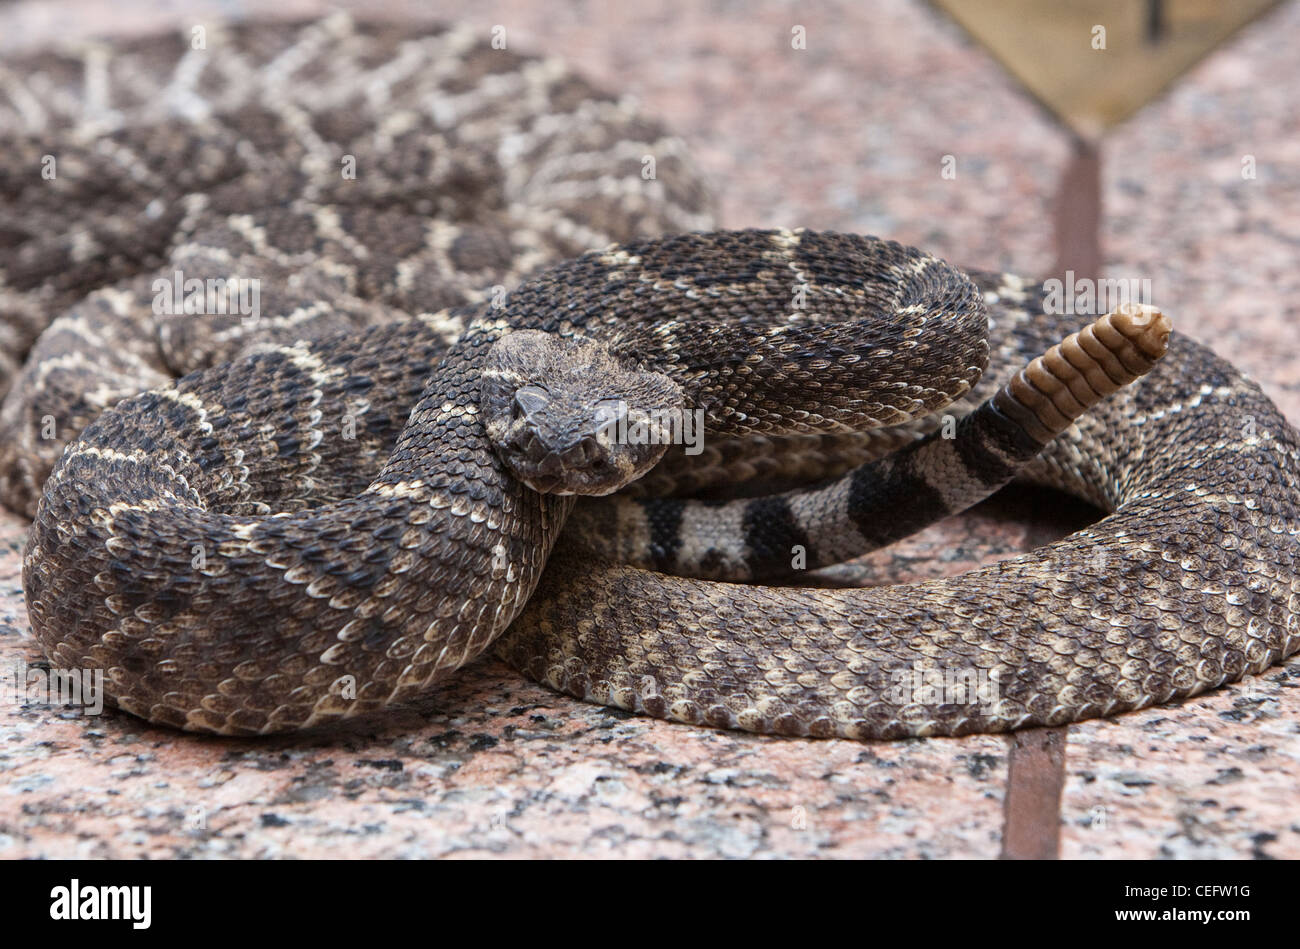 rattlesnake poisonous dangerous rattle venomous Crotalus Sistrurus predator Stock Photo